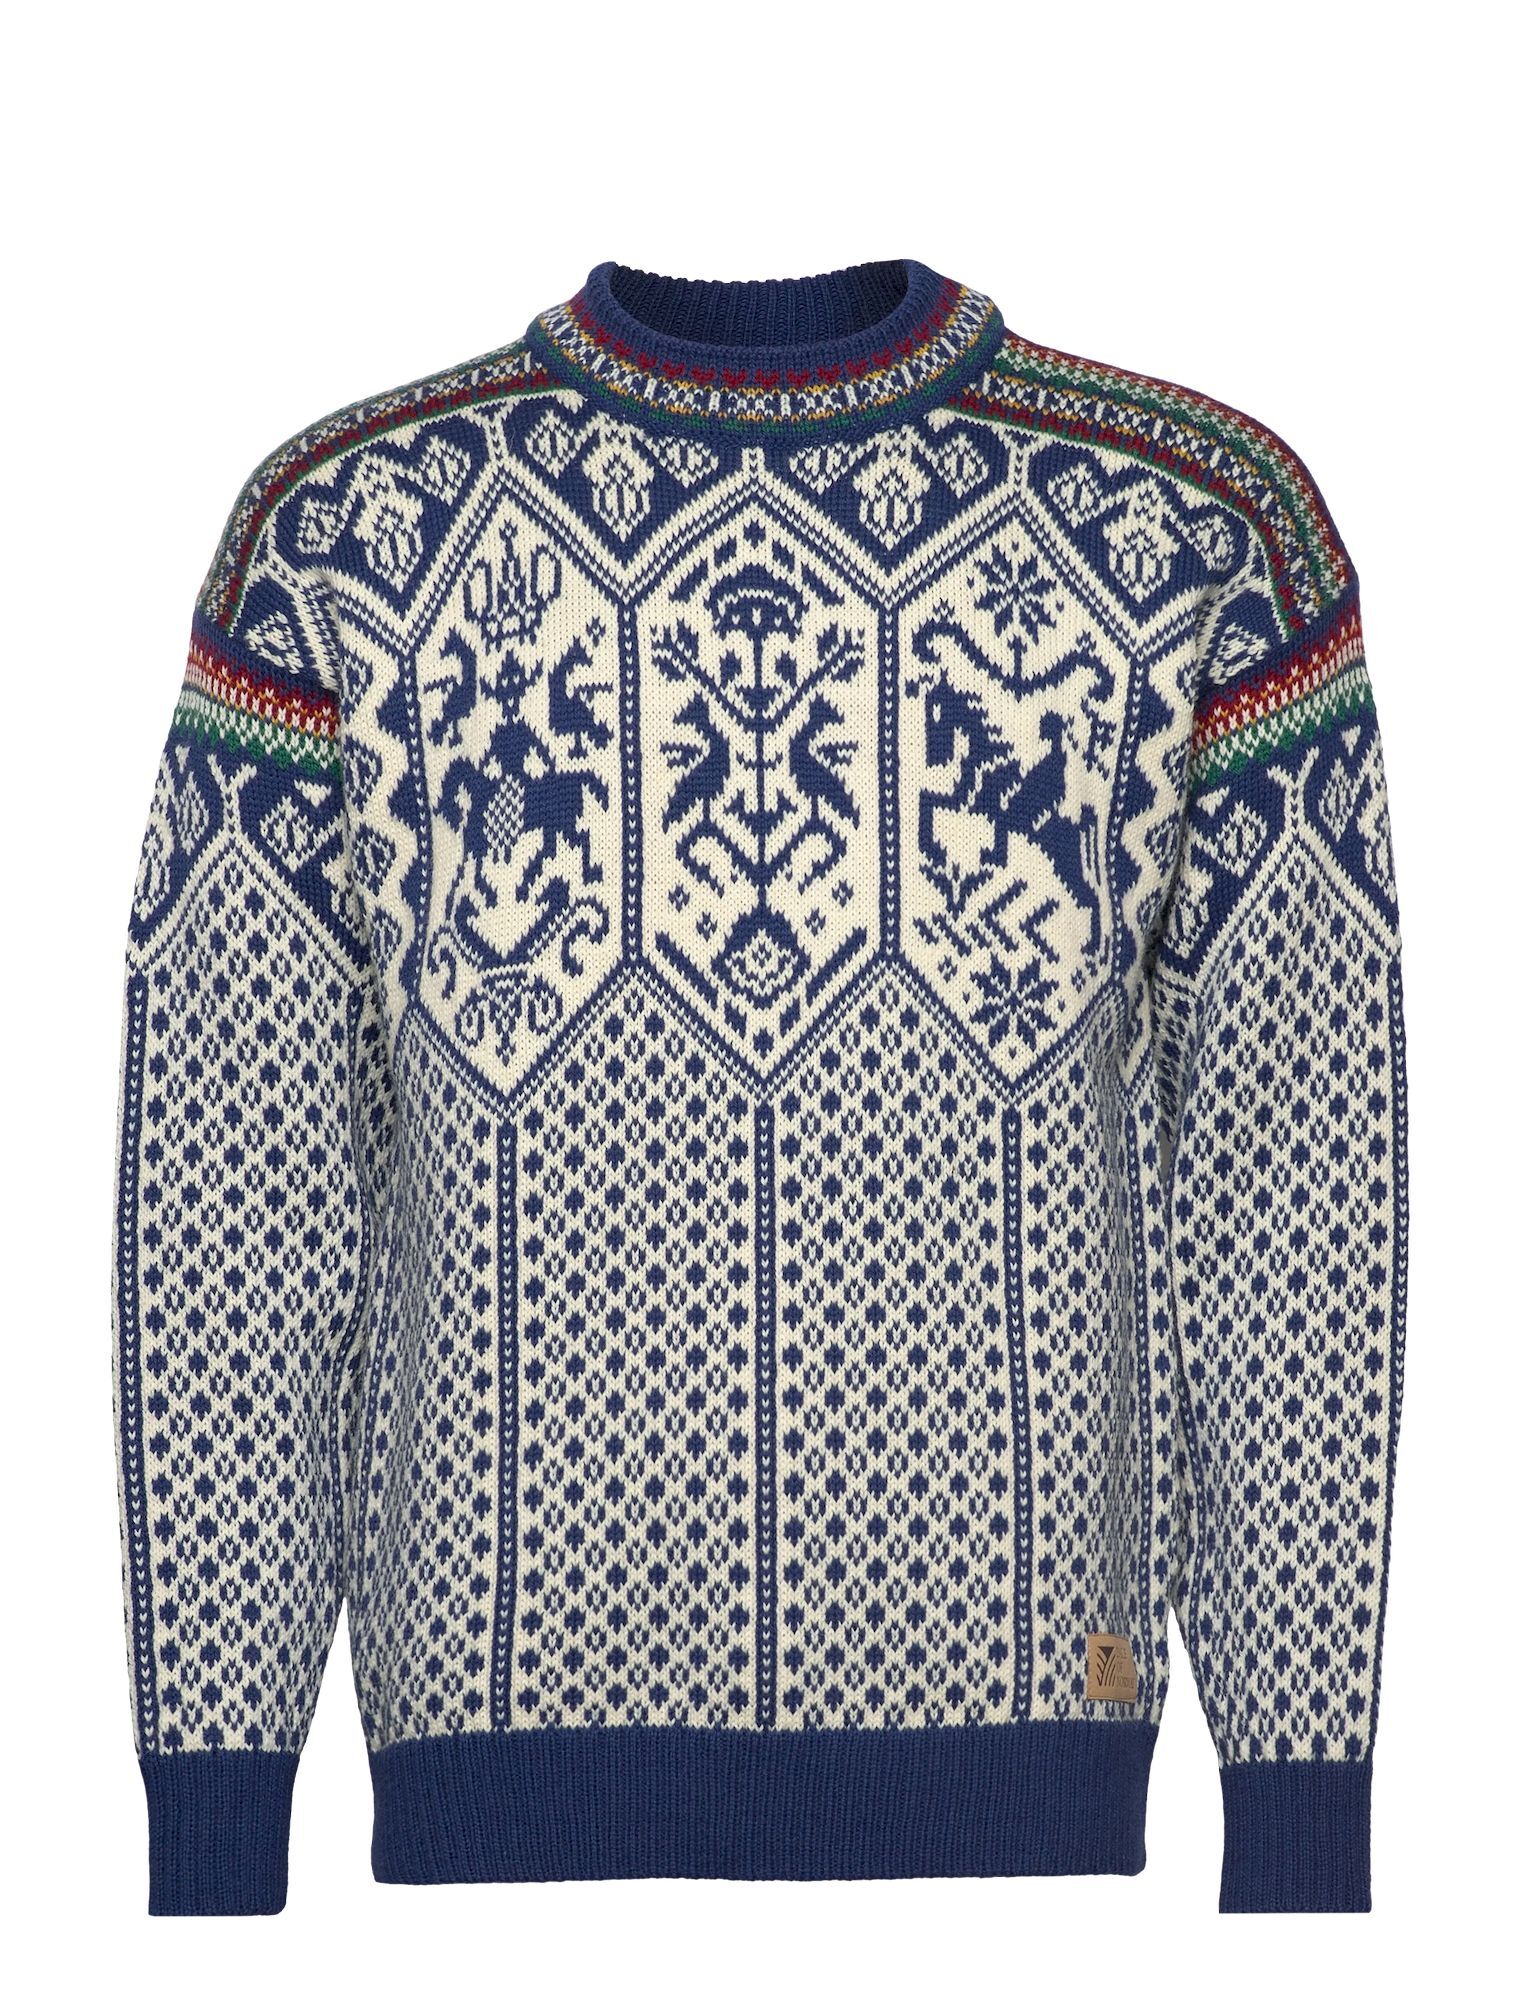 Dale of Norway 1994 Lillehammer Sweater - Pullover in lana merino - Uomo | Hardloop